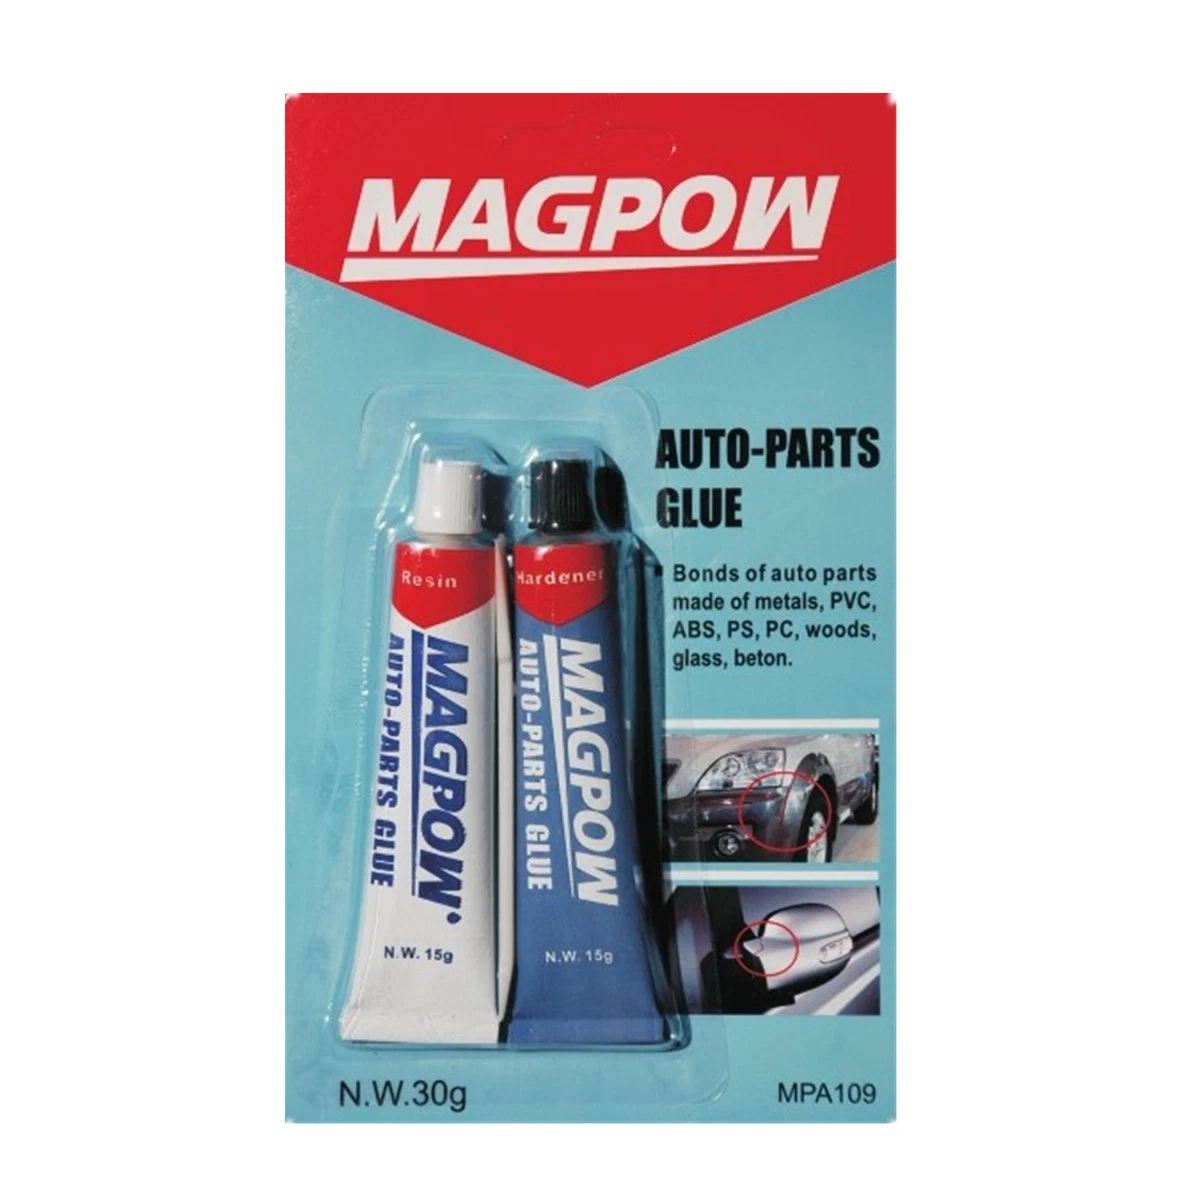 Magpow Ab Gum Epoxid Stahl Klebstoff Epoxy Harz Autoteile Klebstoff